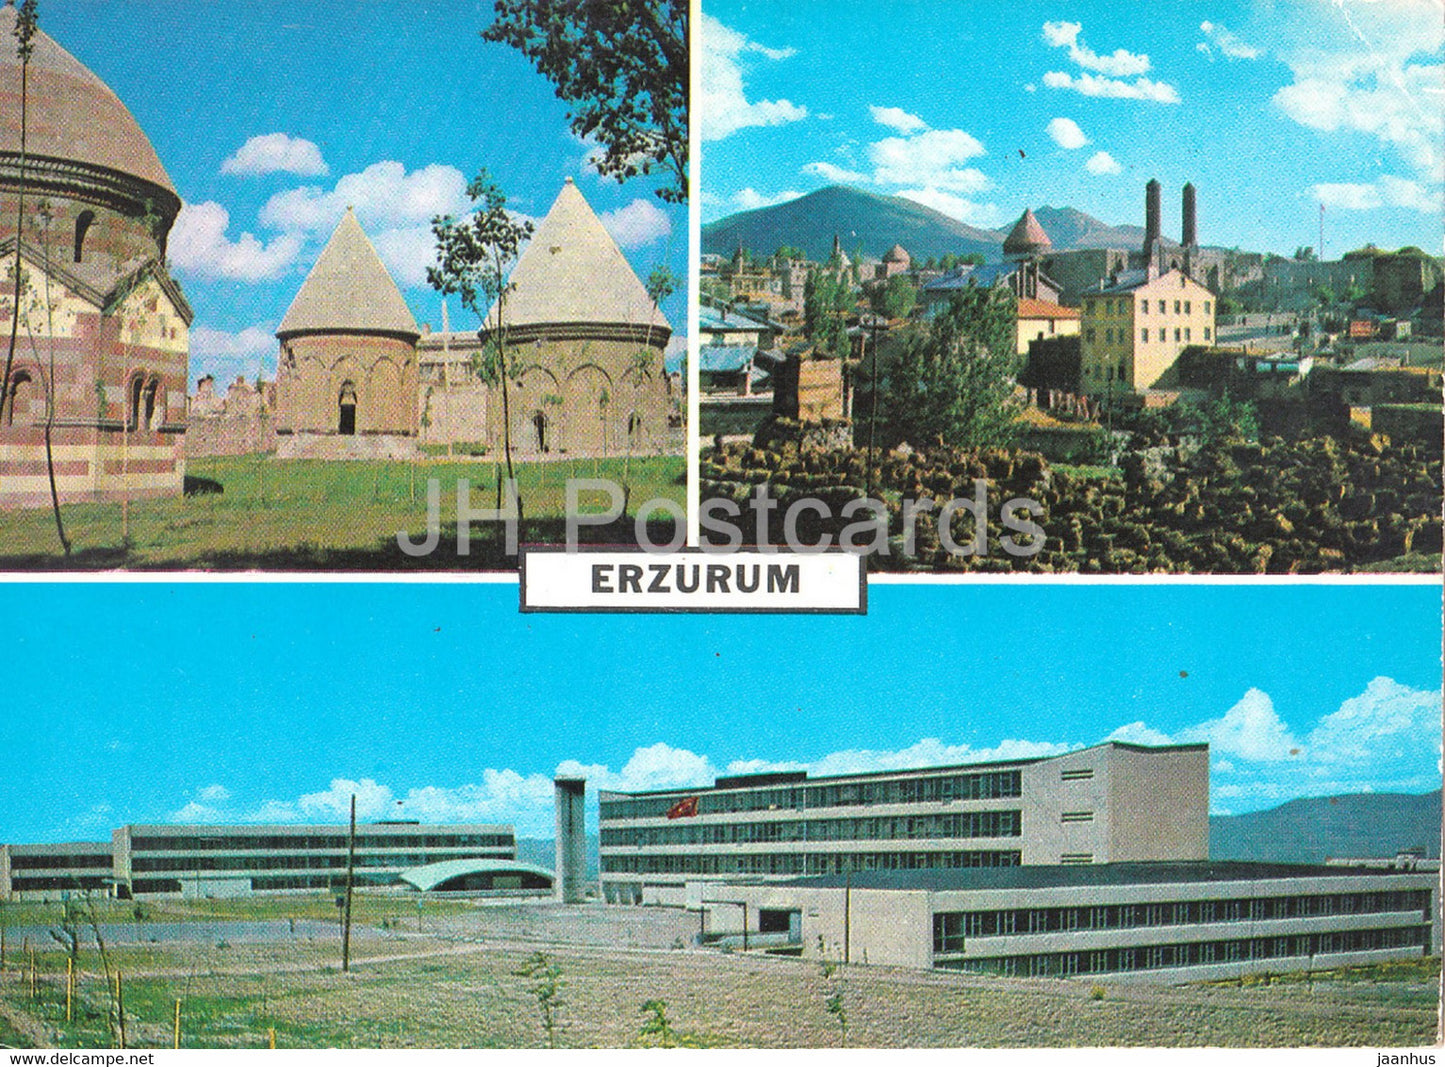 Erzurum - Three cupolas - Double Minarets - Ataturk University - multiview - Turkey - unused - JH Postcards